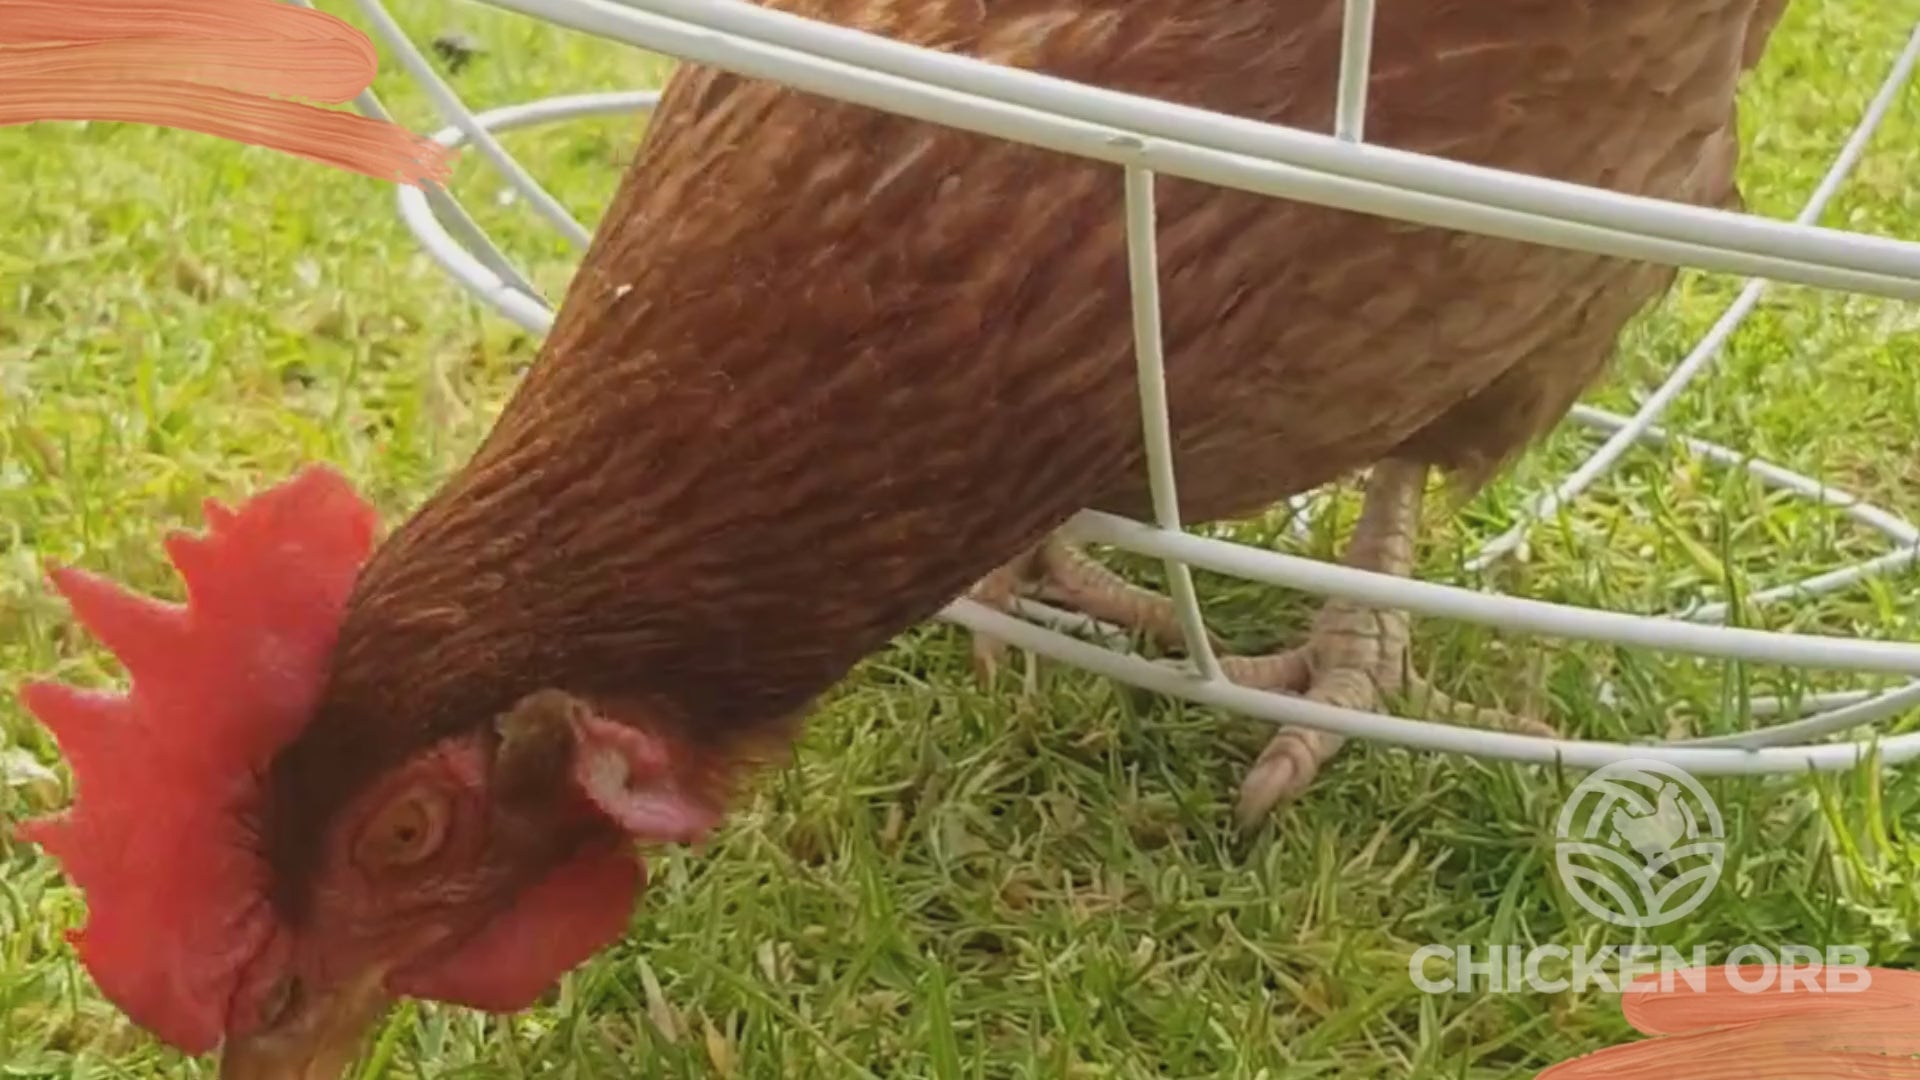 Load video: Chicken Orb Rolling Chicken Enclosure Training Video